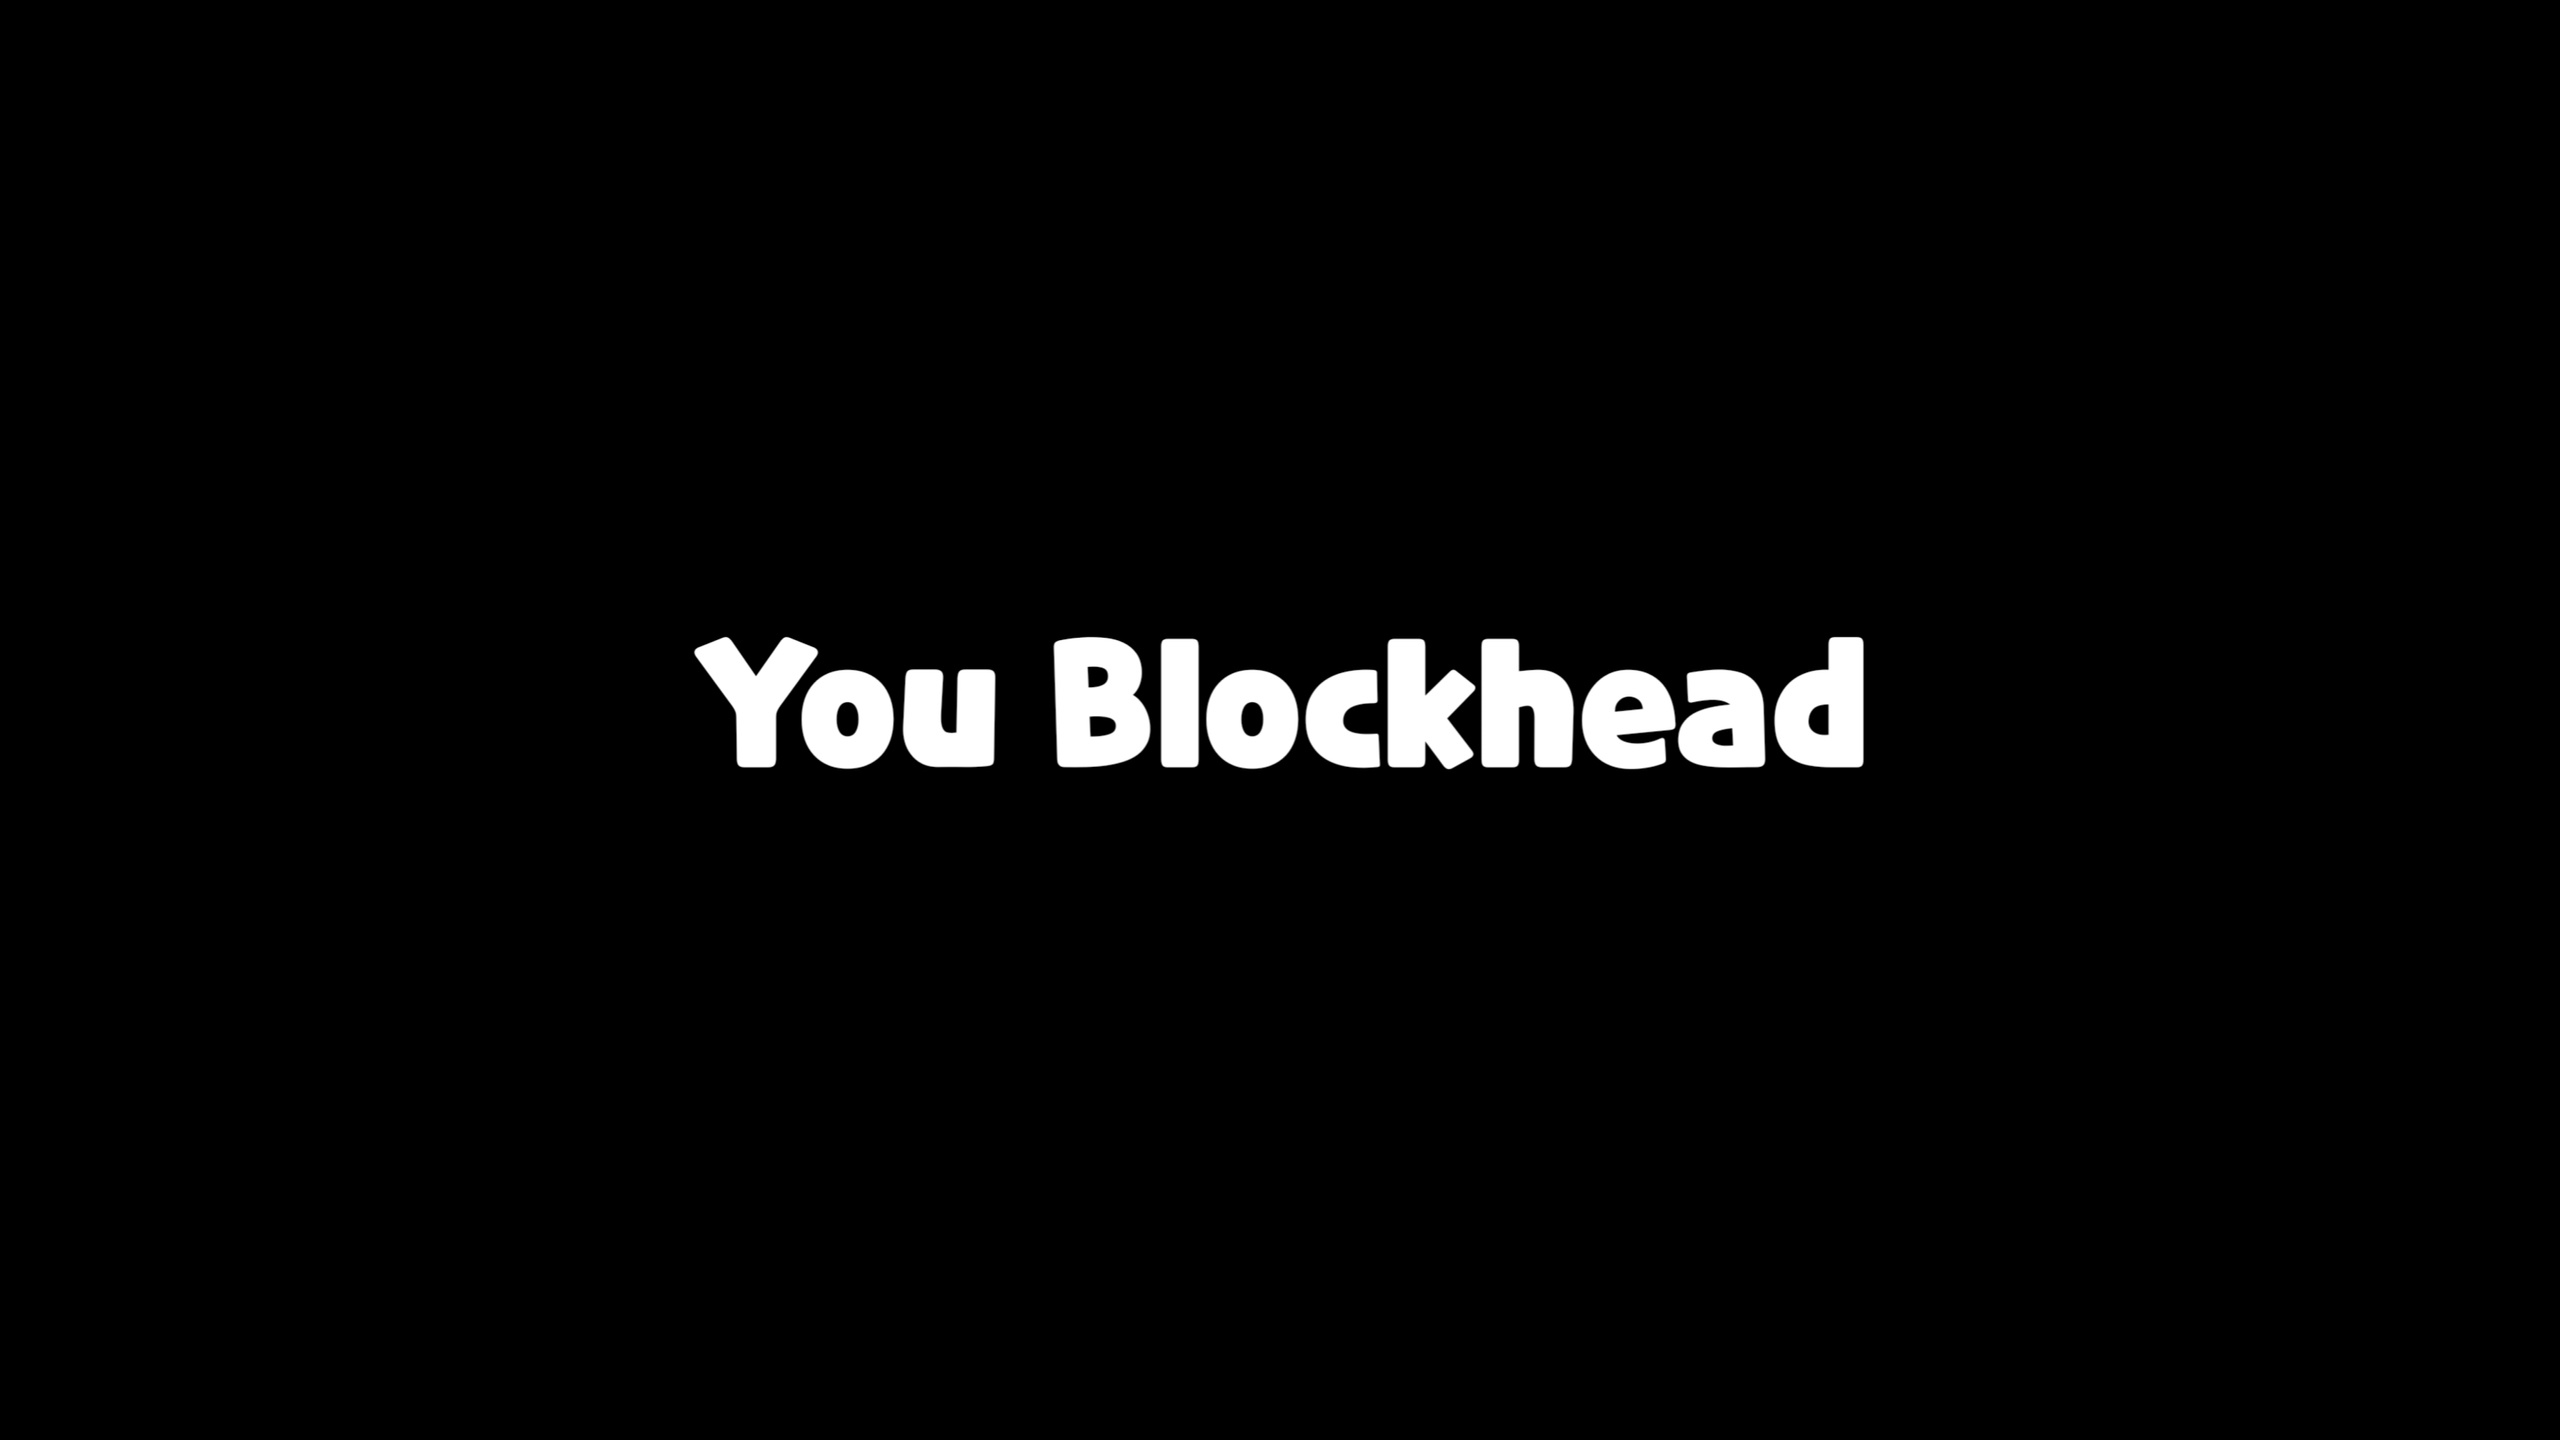 You Blockhead